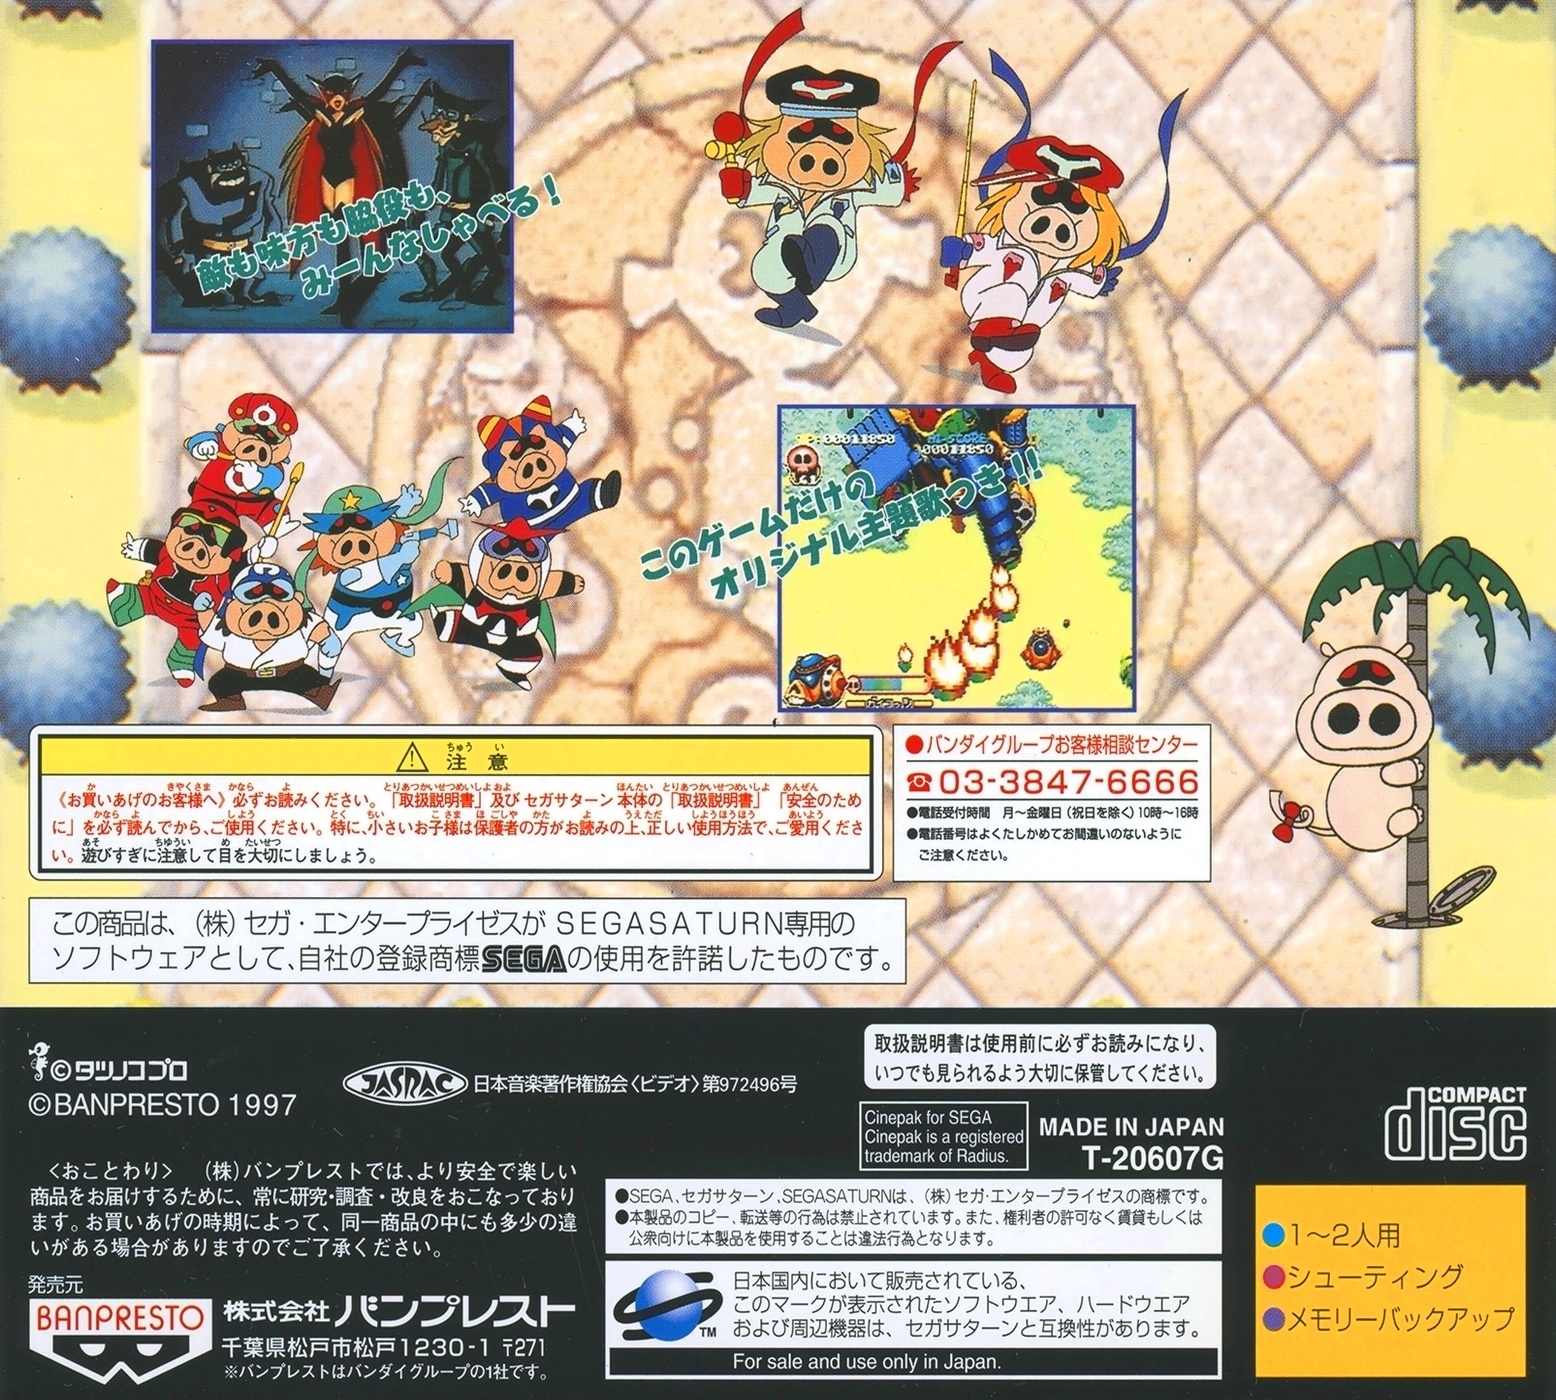 Time Bokan Series Bokan To Ippatsu Doronboo Kanpekiban Boxarts For Sega Saturn The Video Games Museum